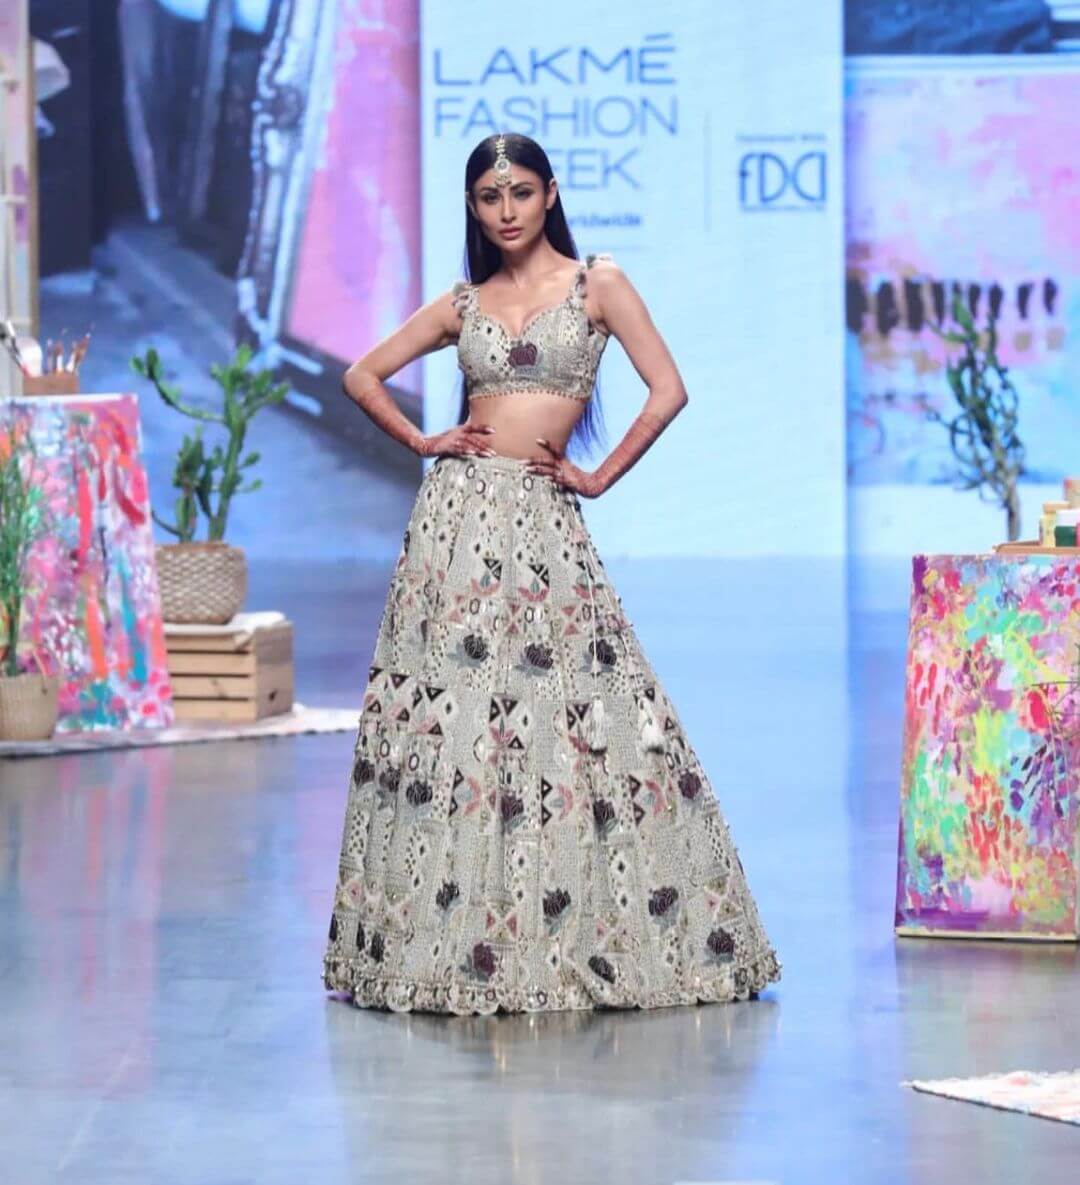 Lakme Fashion Week: Bollywood Celebrities Spotted At The Runway - Mouni Roy's Eye-Catching Glossy Lehenga